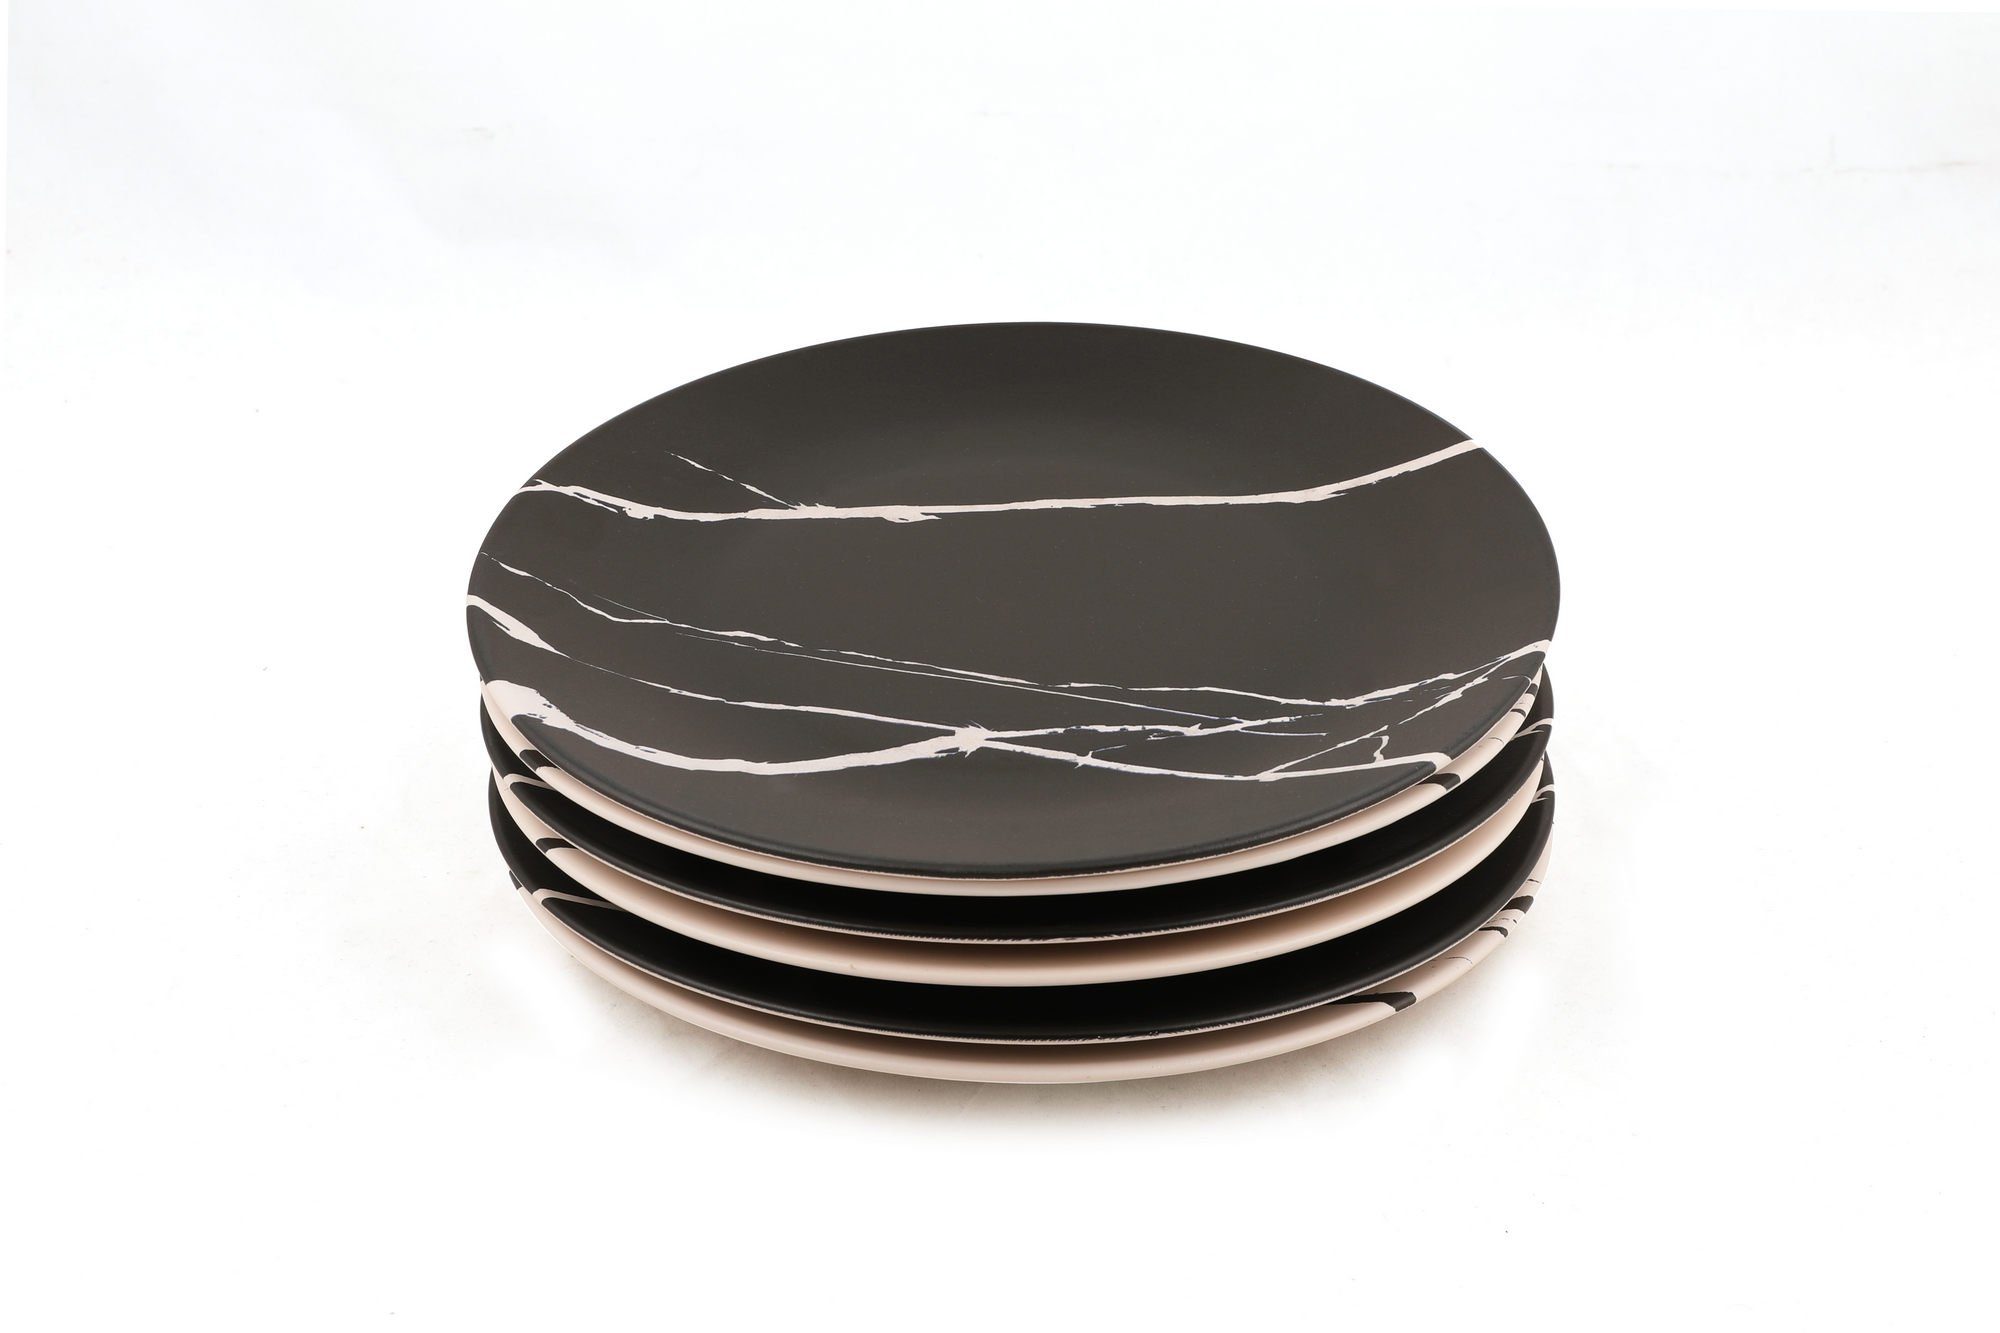 KRM1404, Teller-Set Keramik 100% Essteller, Hermia Weiß, Concept